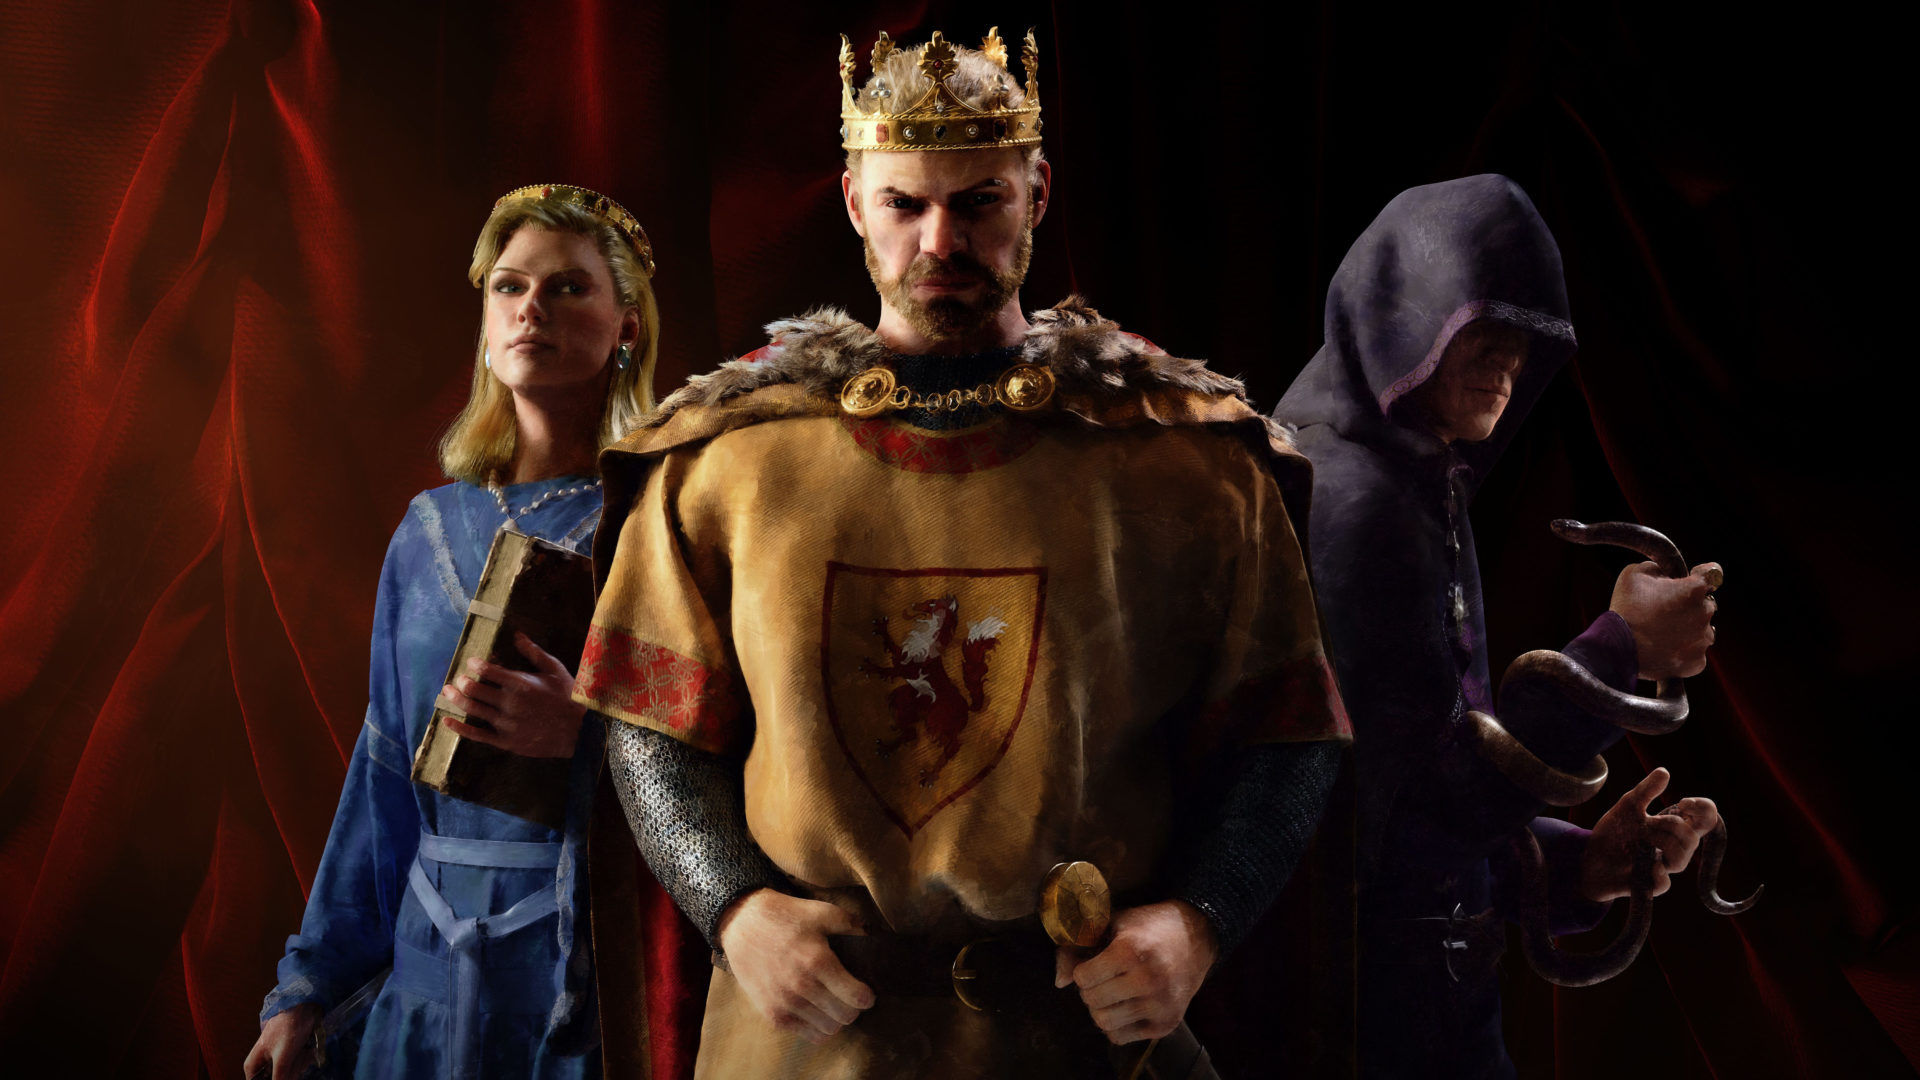 Crusader Kings 3